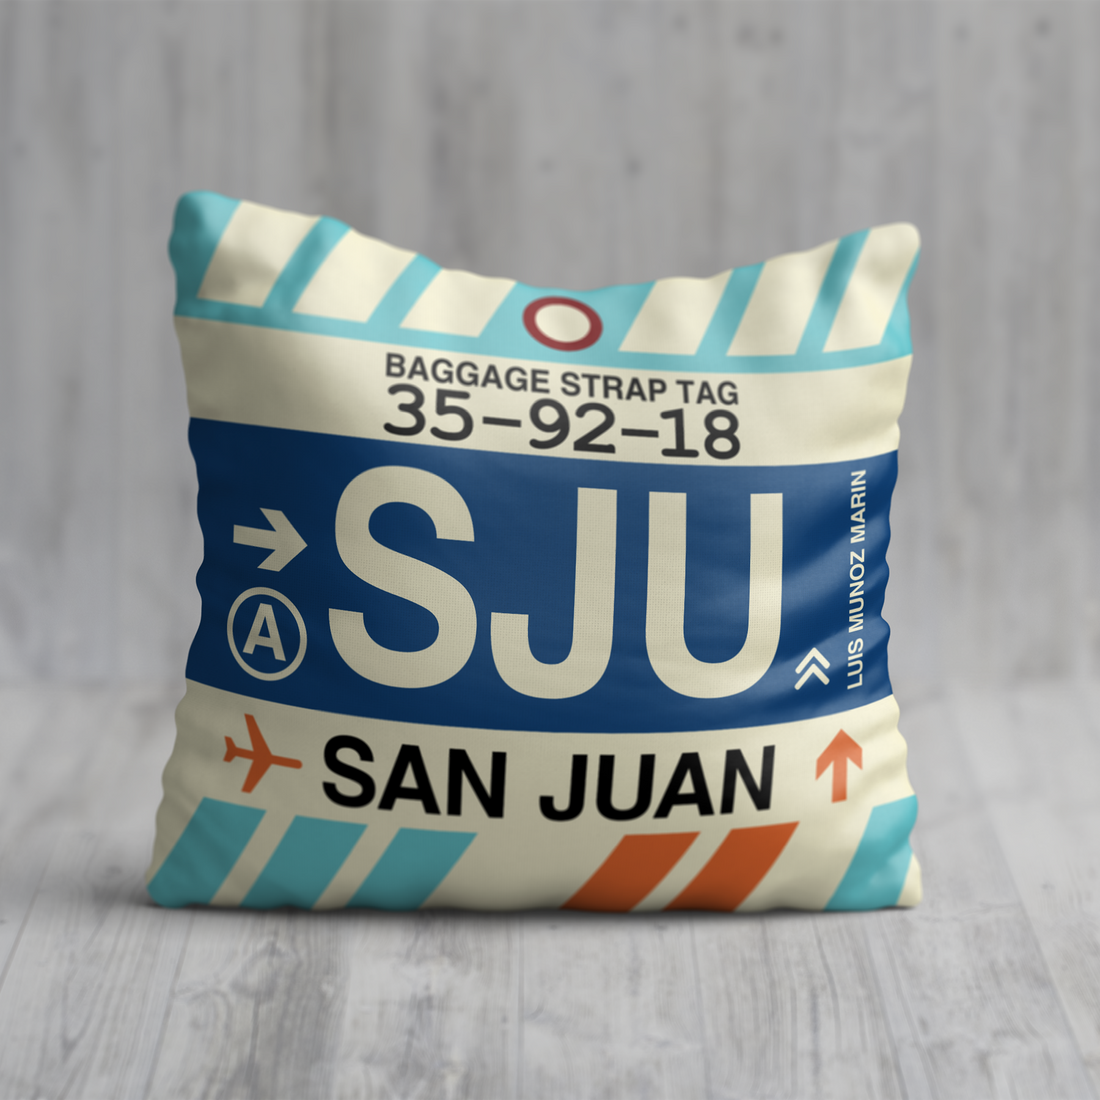 San Juan Gift Ideas • Wall Art & Home Decor Featuring the SJU Airport Code